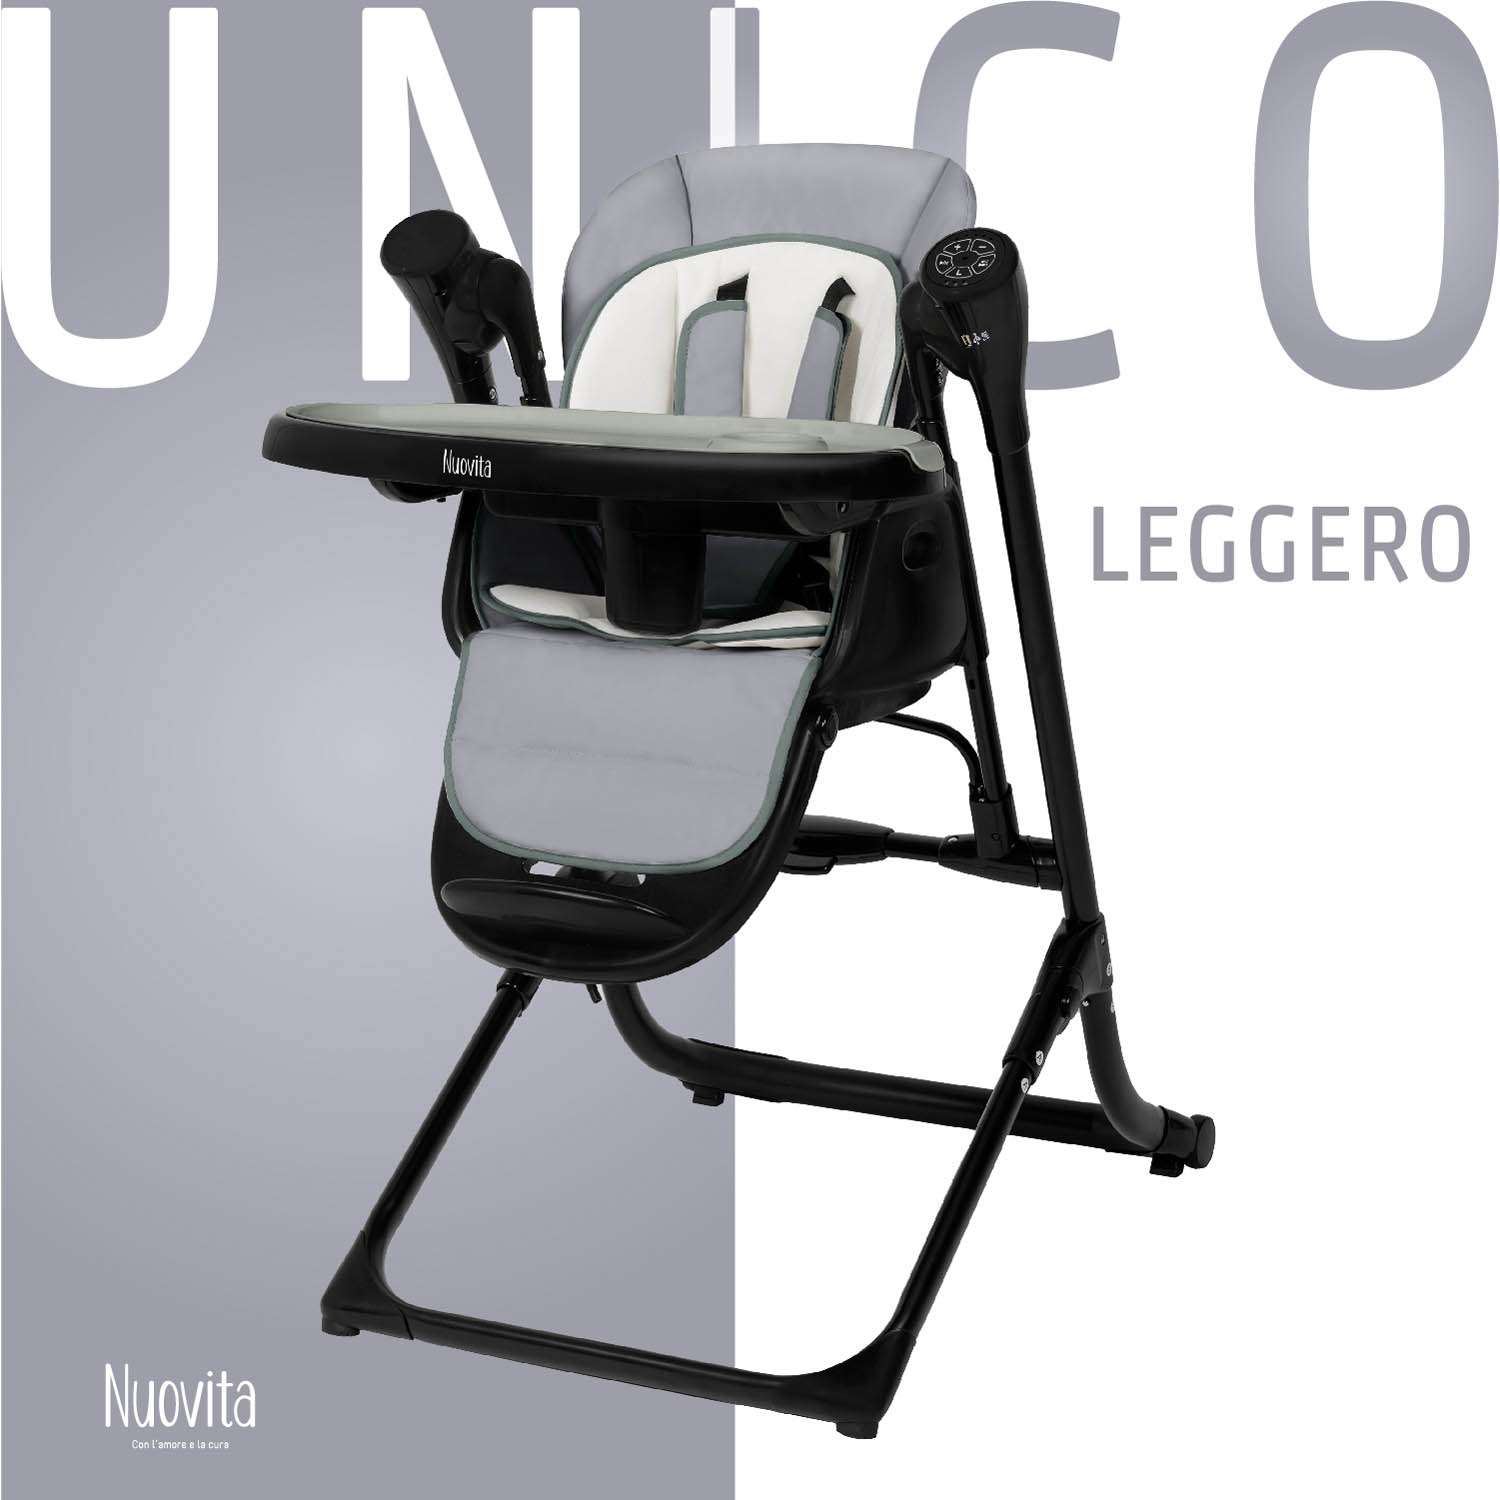 Стульчик для кормления 3 в 1 Nuovita Unico Leggero Nero серый - фото 1